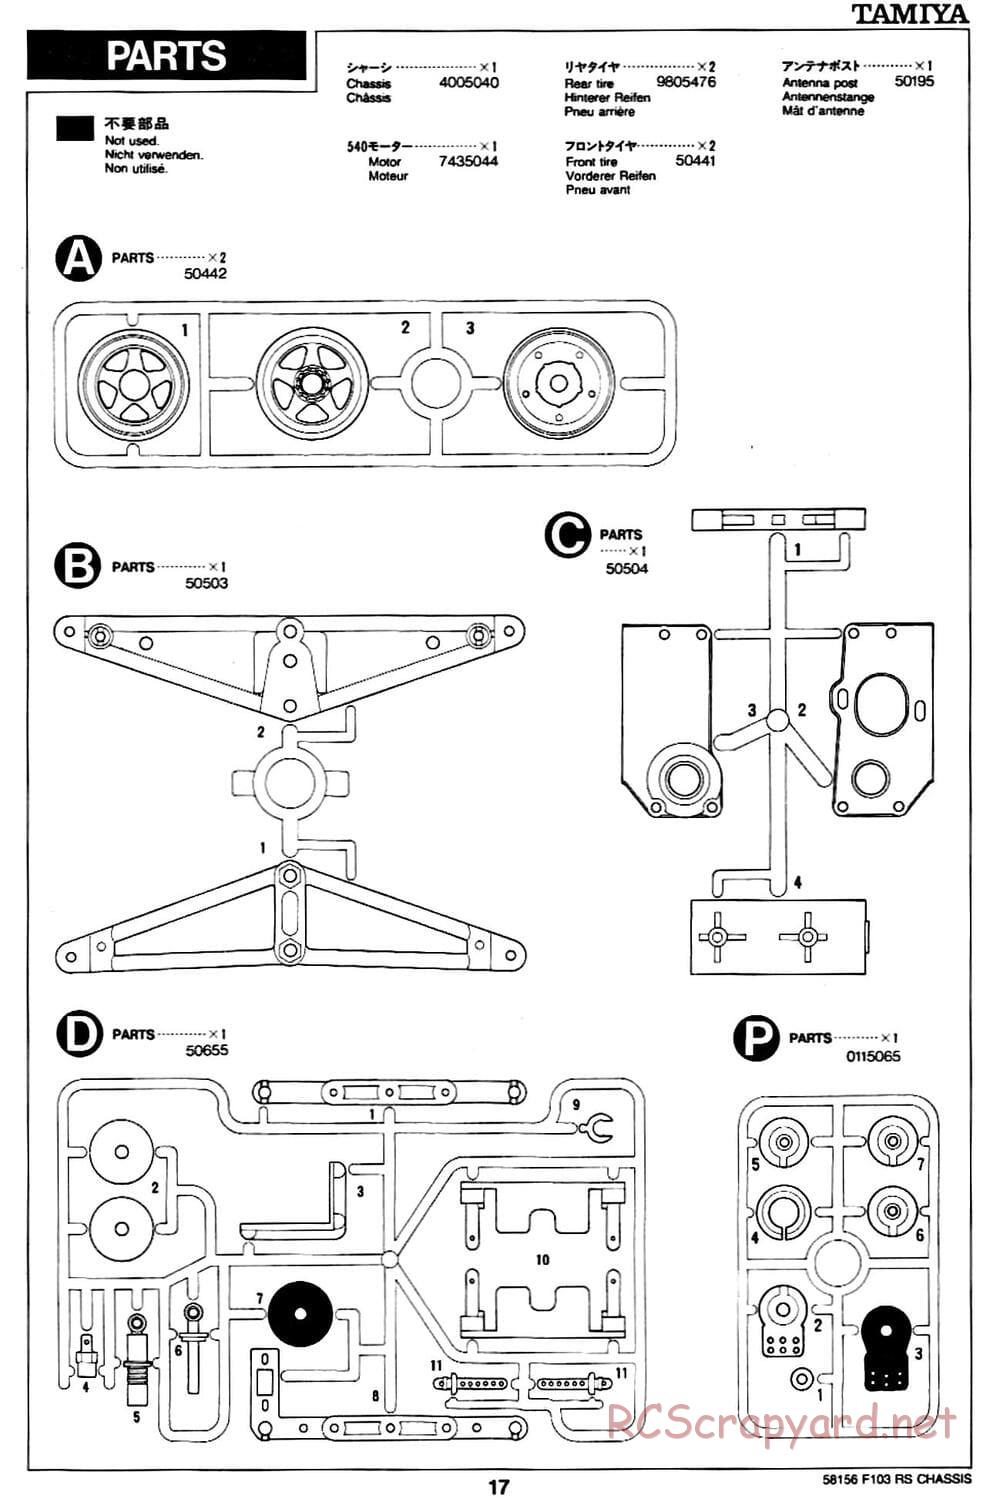 Tamiya - F103RS Chassis - Manual - Page 17